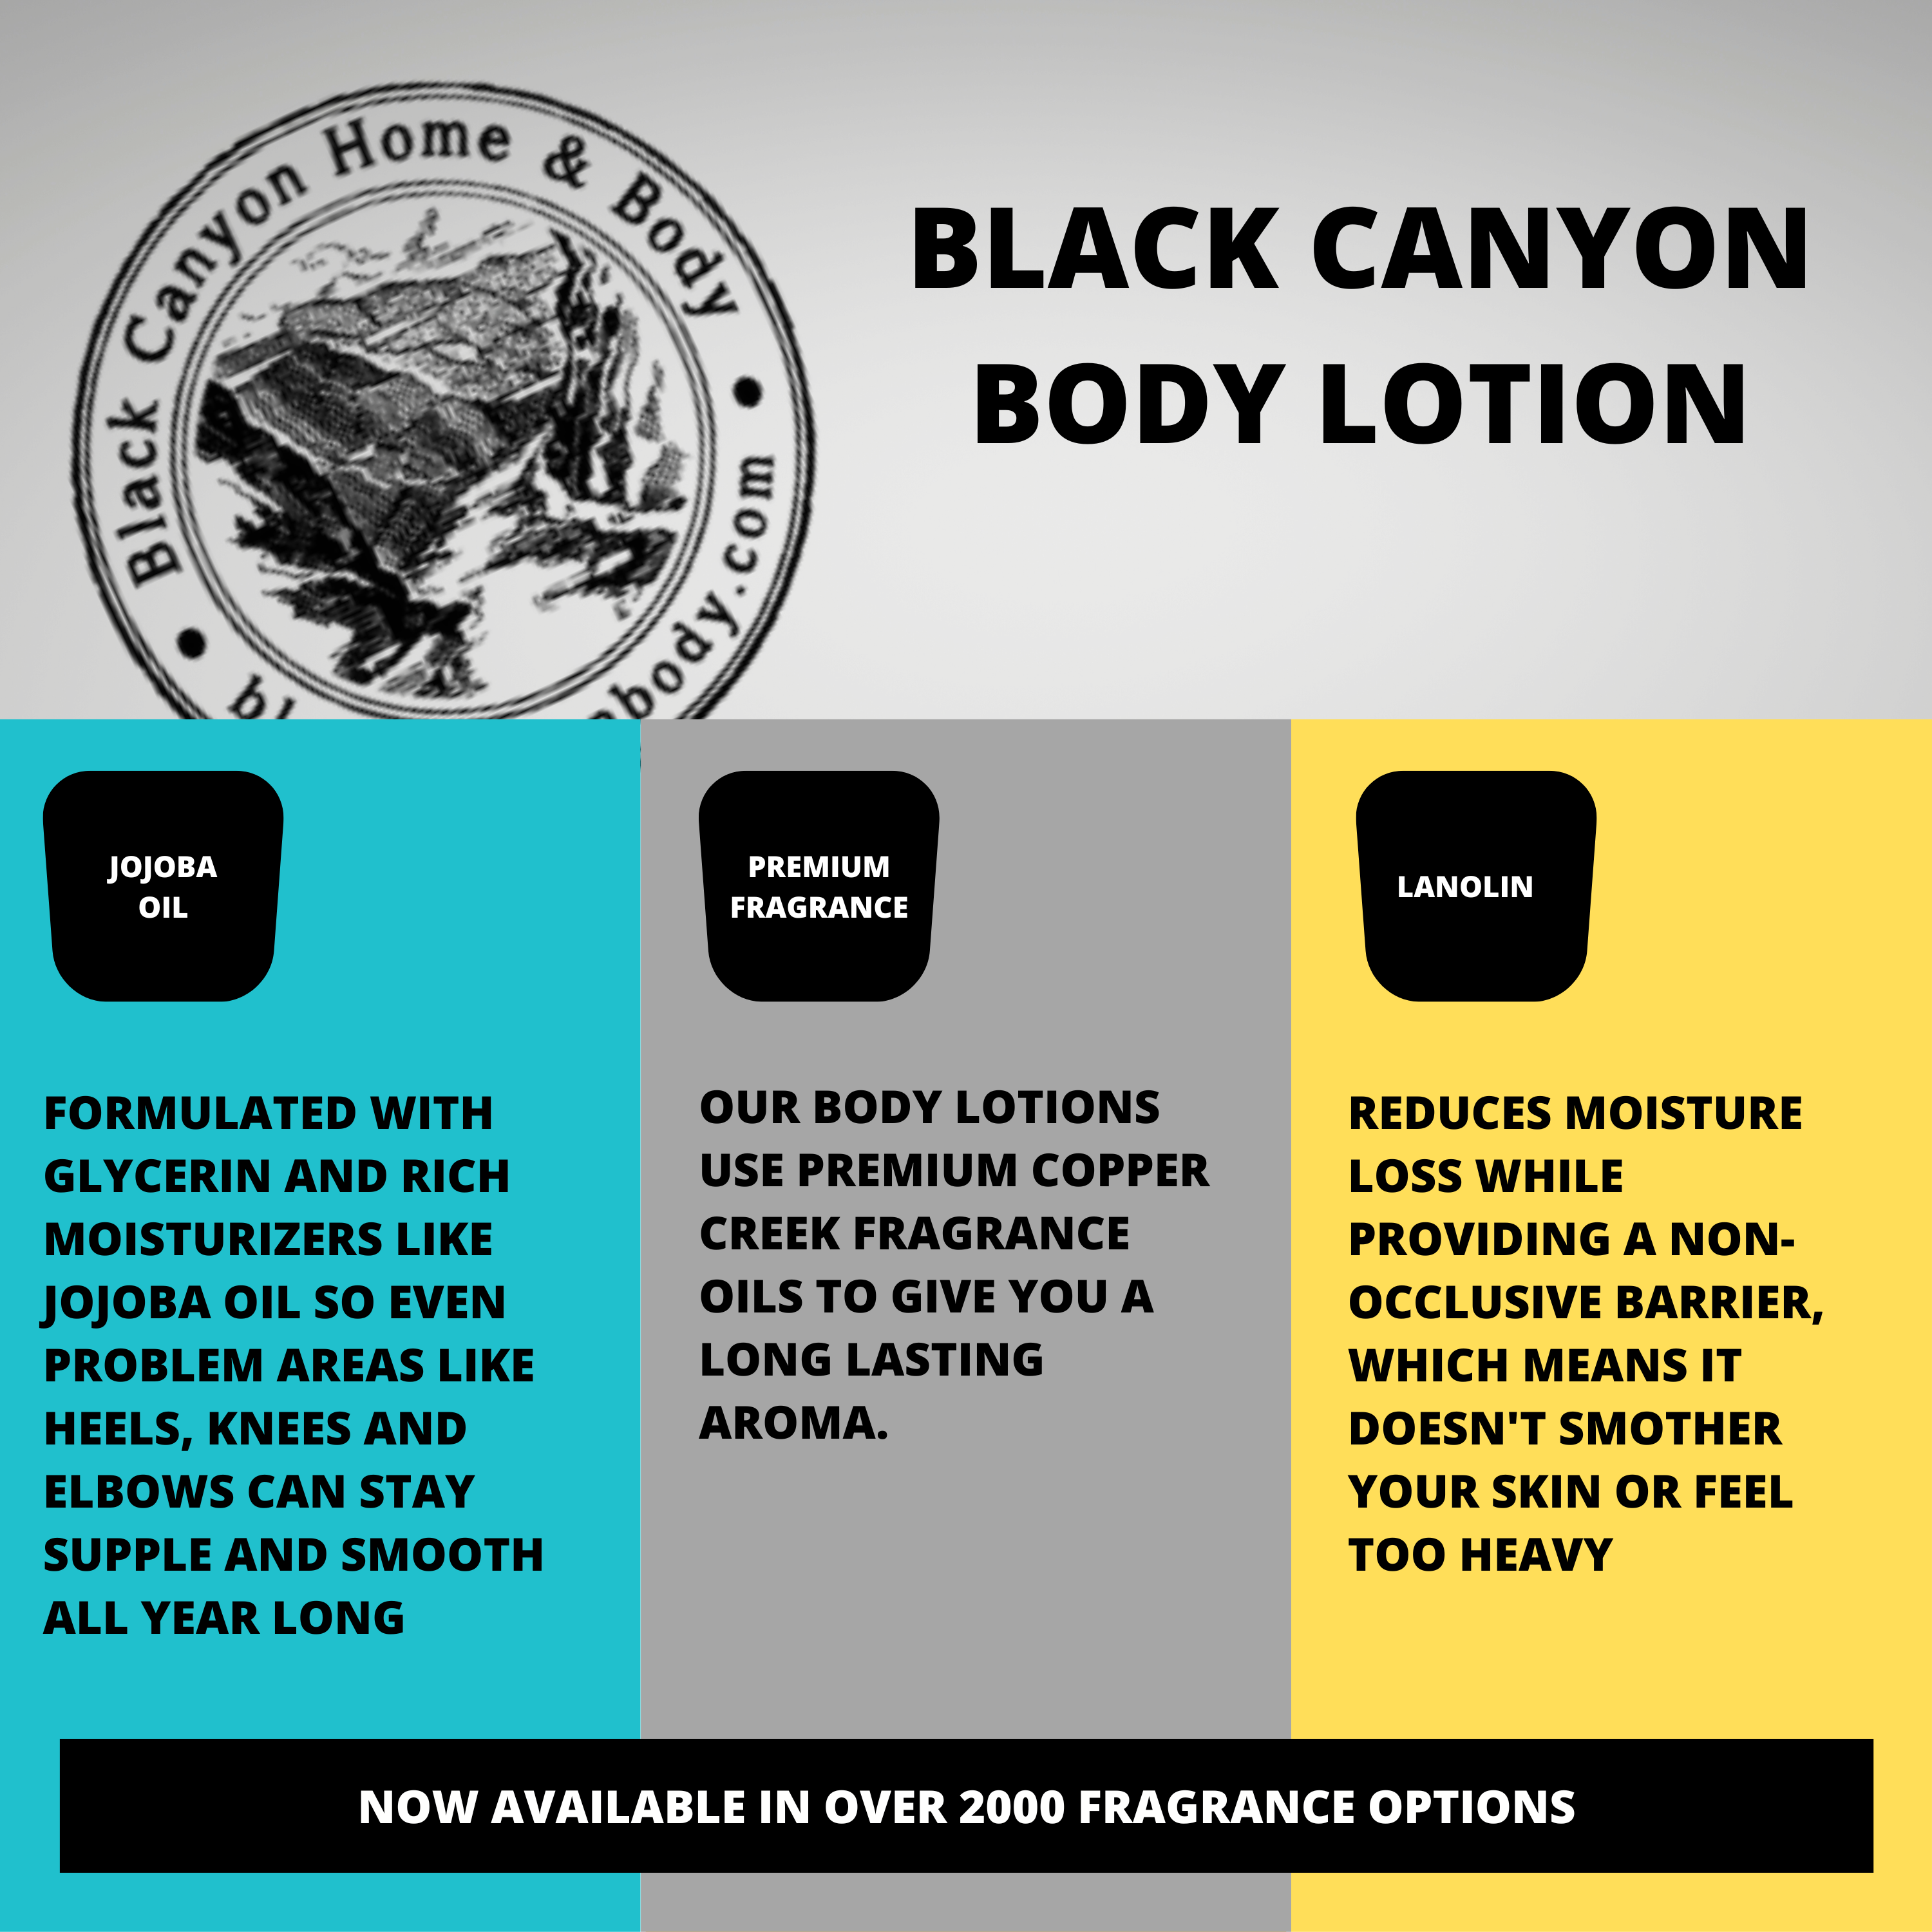 Black Canyon Banana Kiwi Scented Luxury Body Lotion with Lanolin and Jojoba Oil